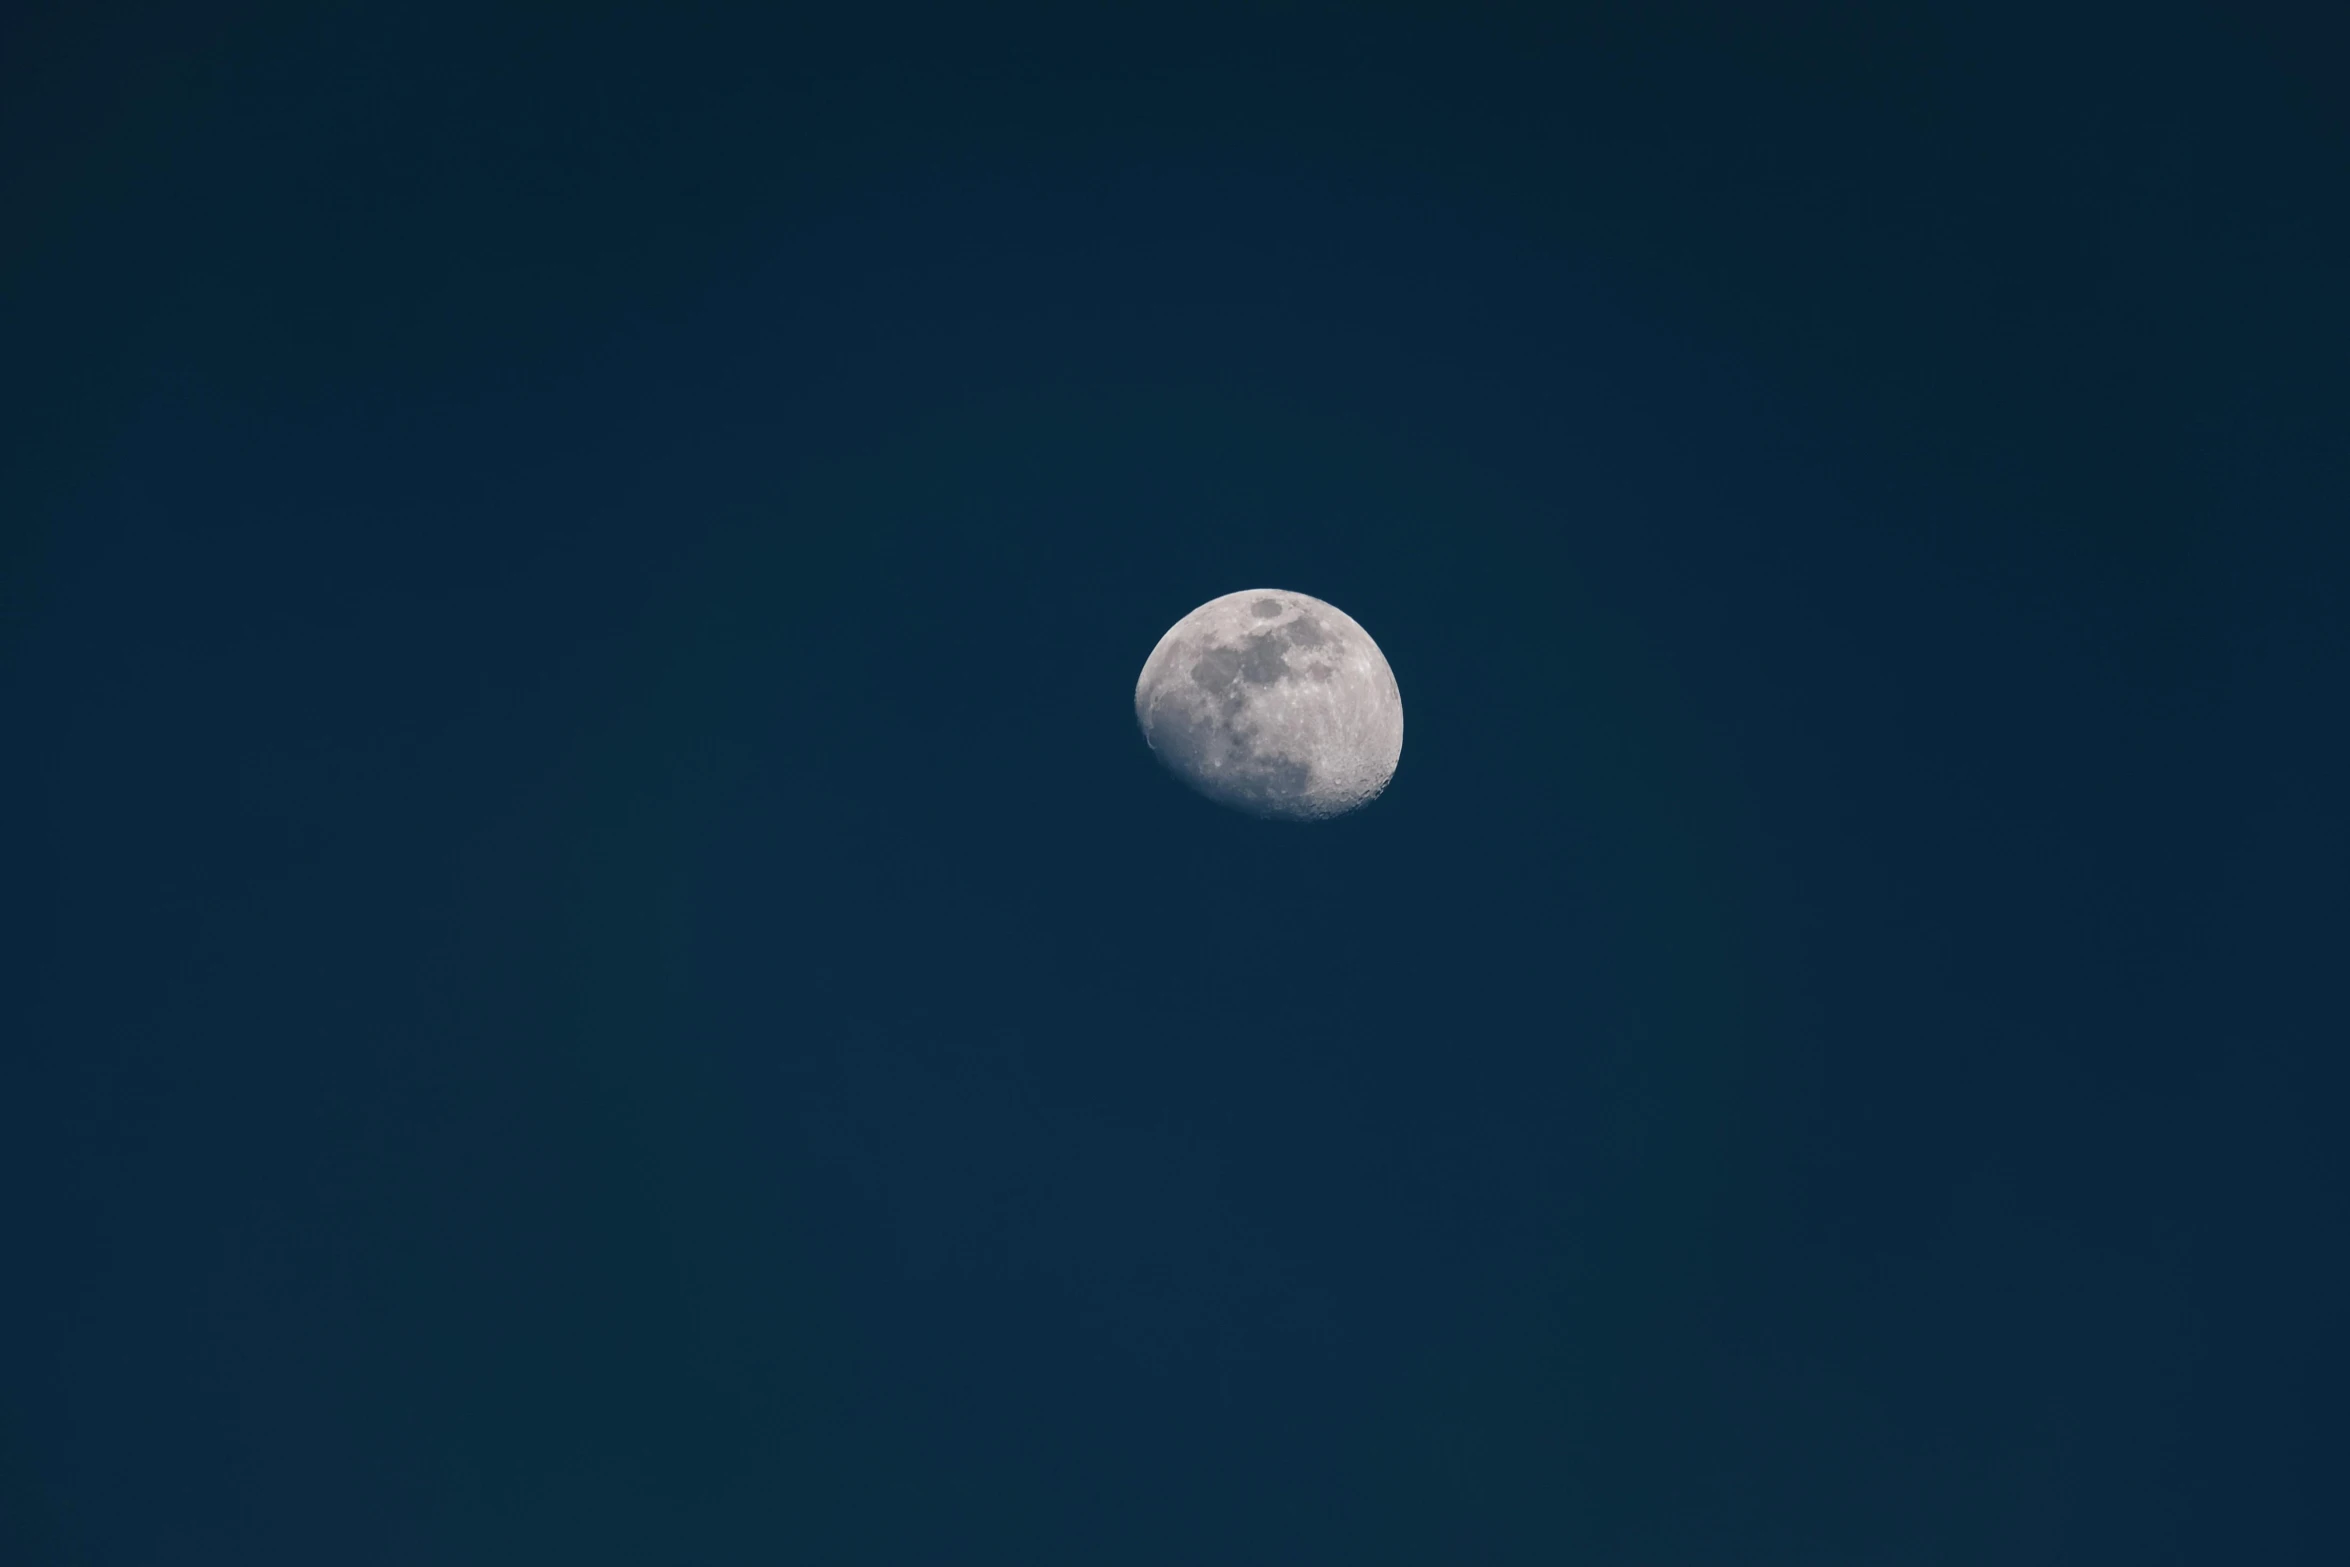 the moon seen through the dark blue sky